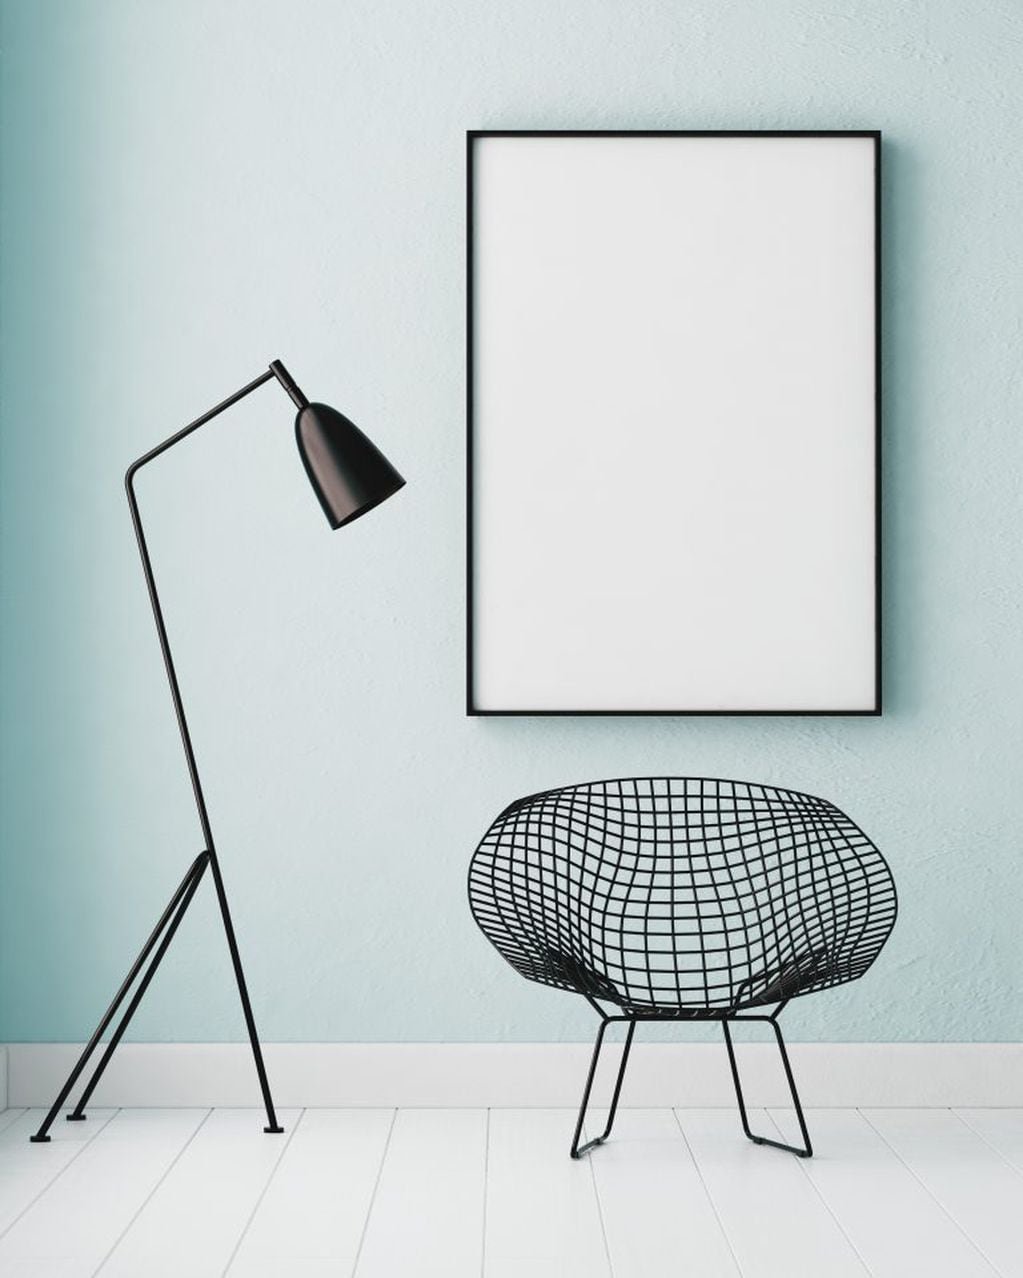 Con apenas tres elementos -un sillón, una lámpara, un cuadro- podés armarte un rincón de lectura con mucho estilo.